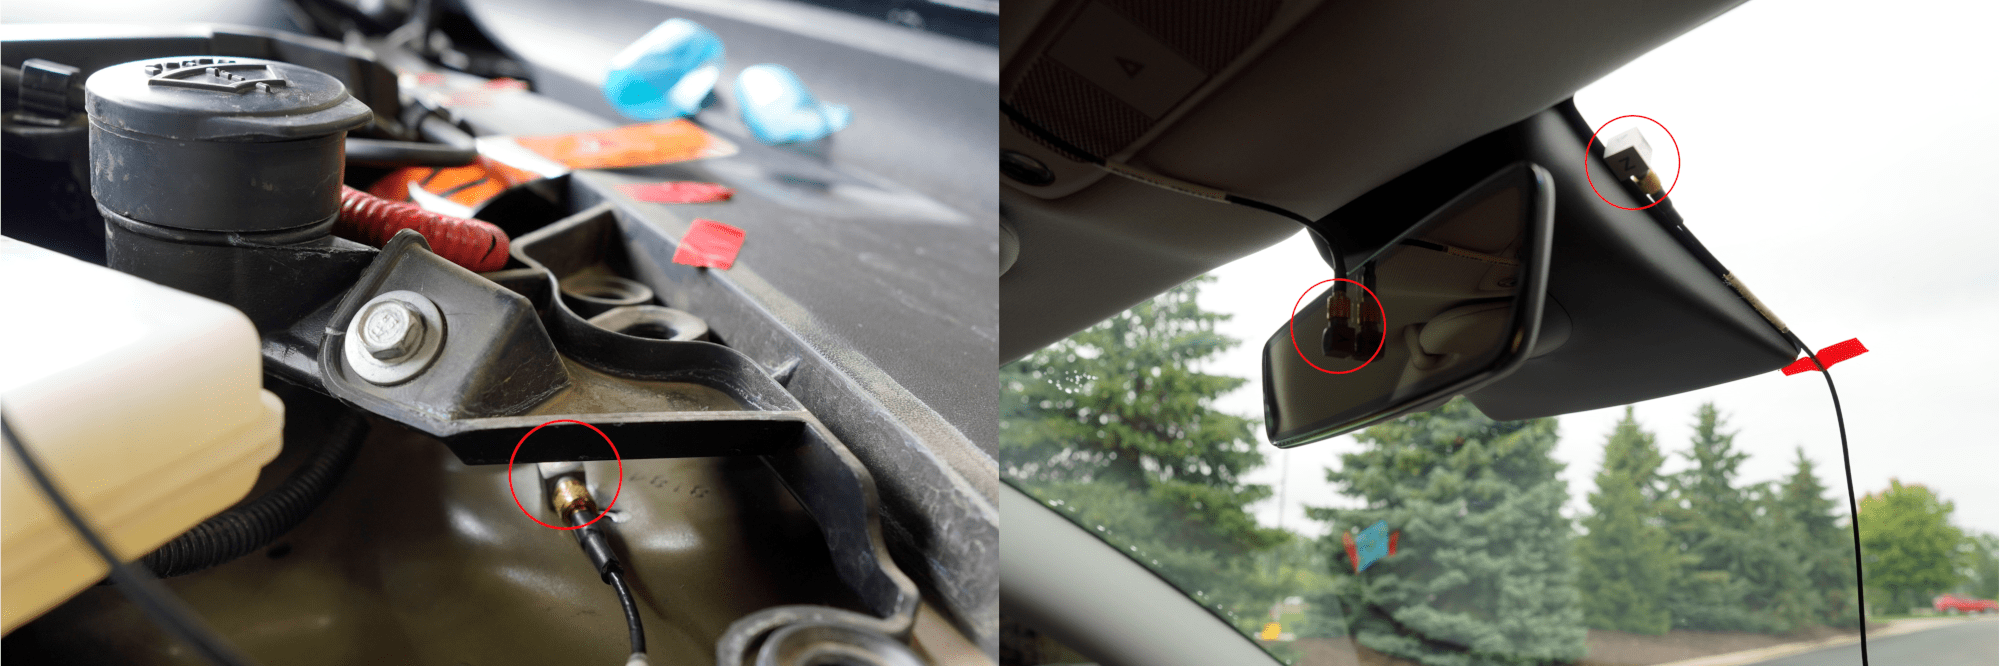 sensor placement on test vehicles